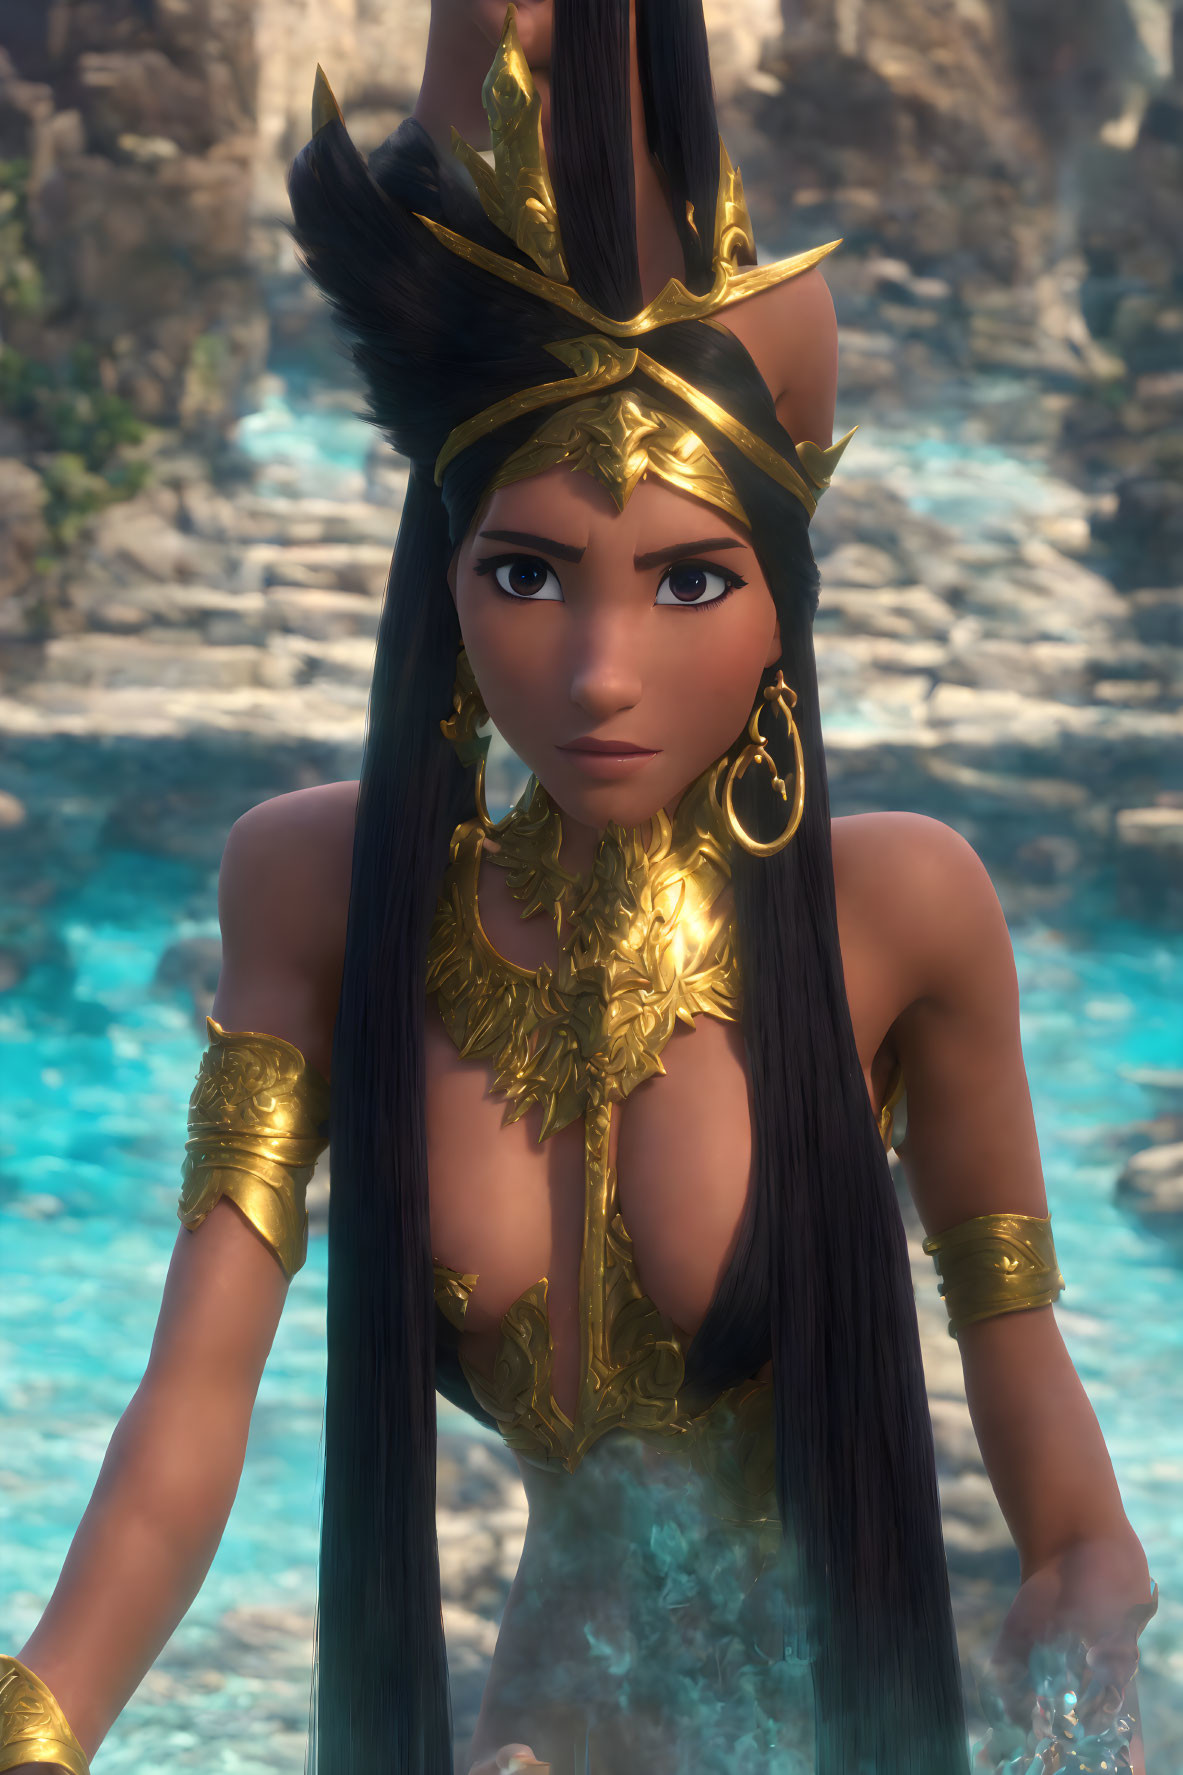 Pharaonic girl